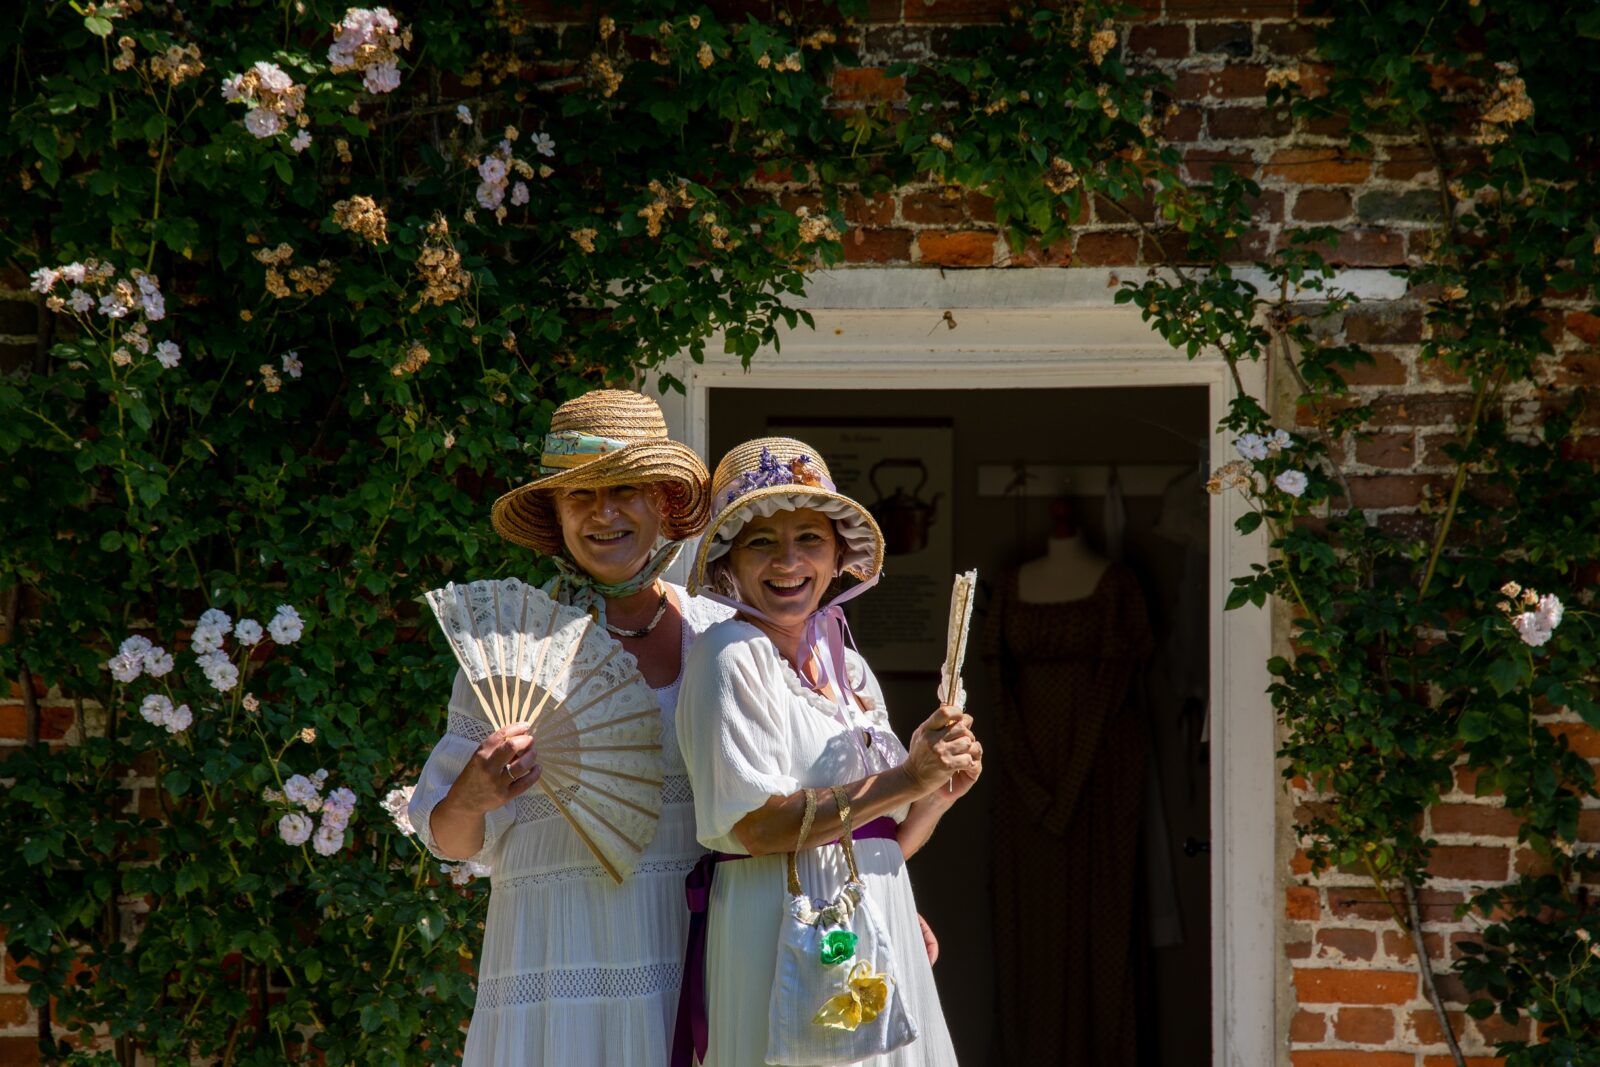 Regency Dress Up Day at Jane Austen's House